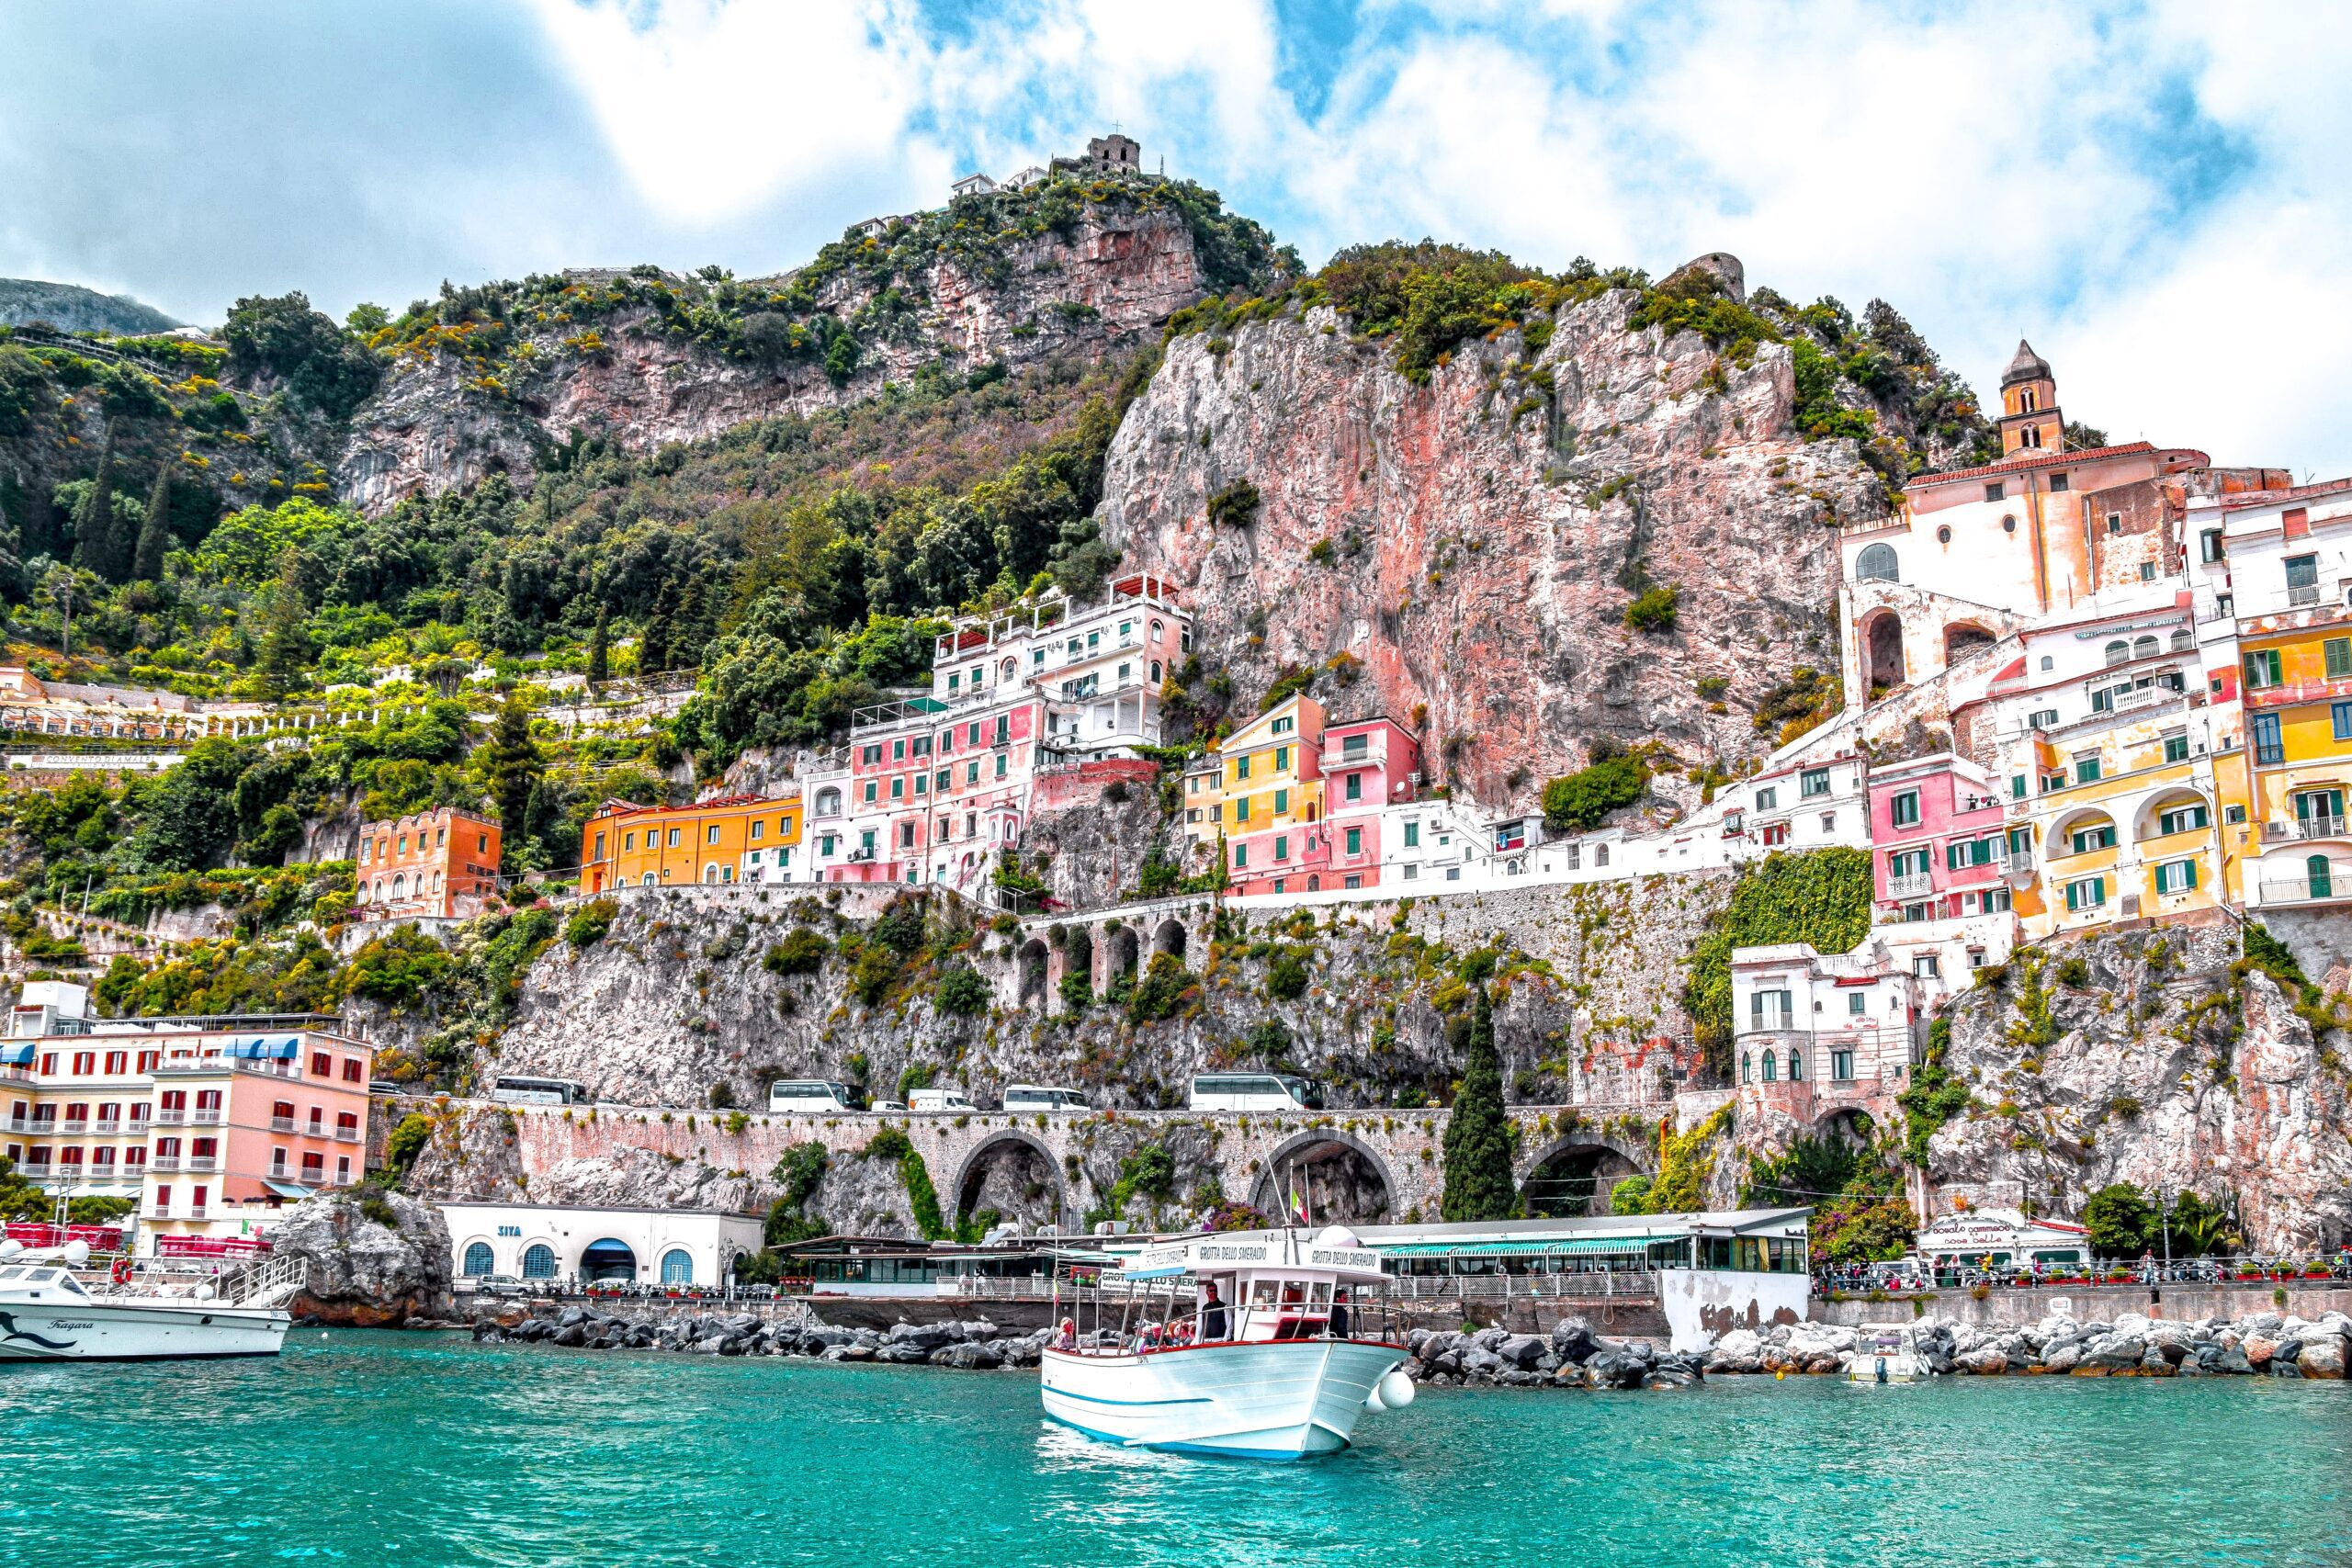 Enjoying the view of Amalfi Coast from the ferry. Italy, Amalfi Coast to Puglia - Collette Travel